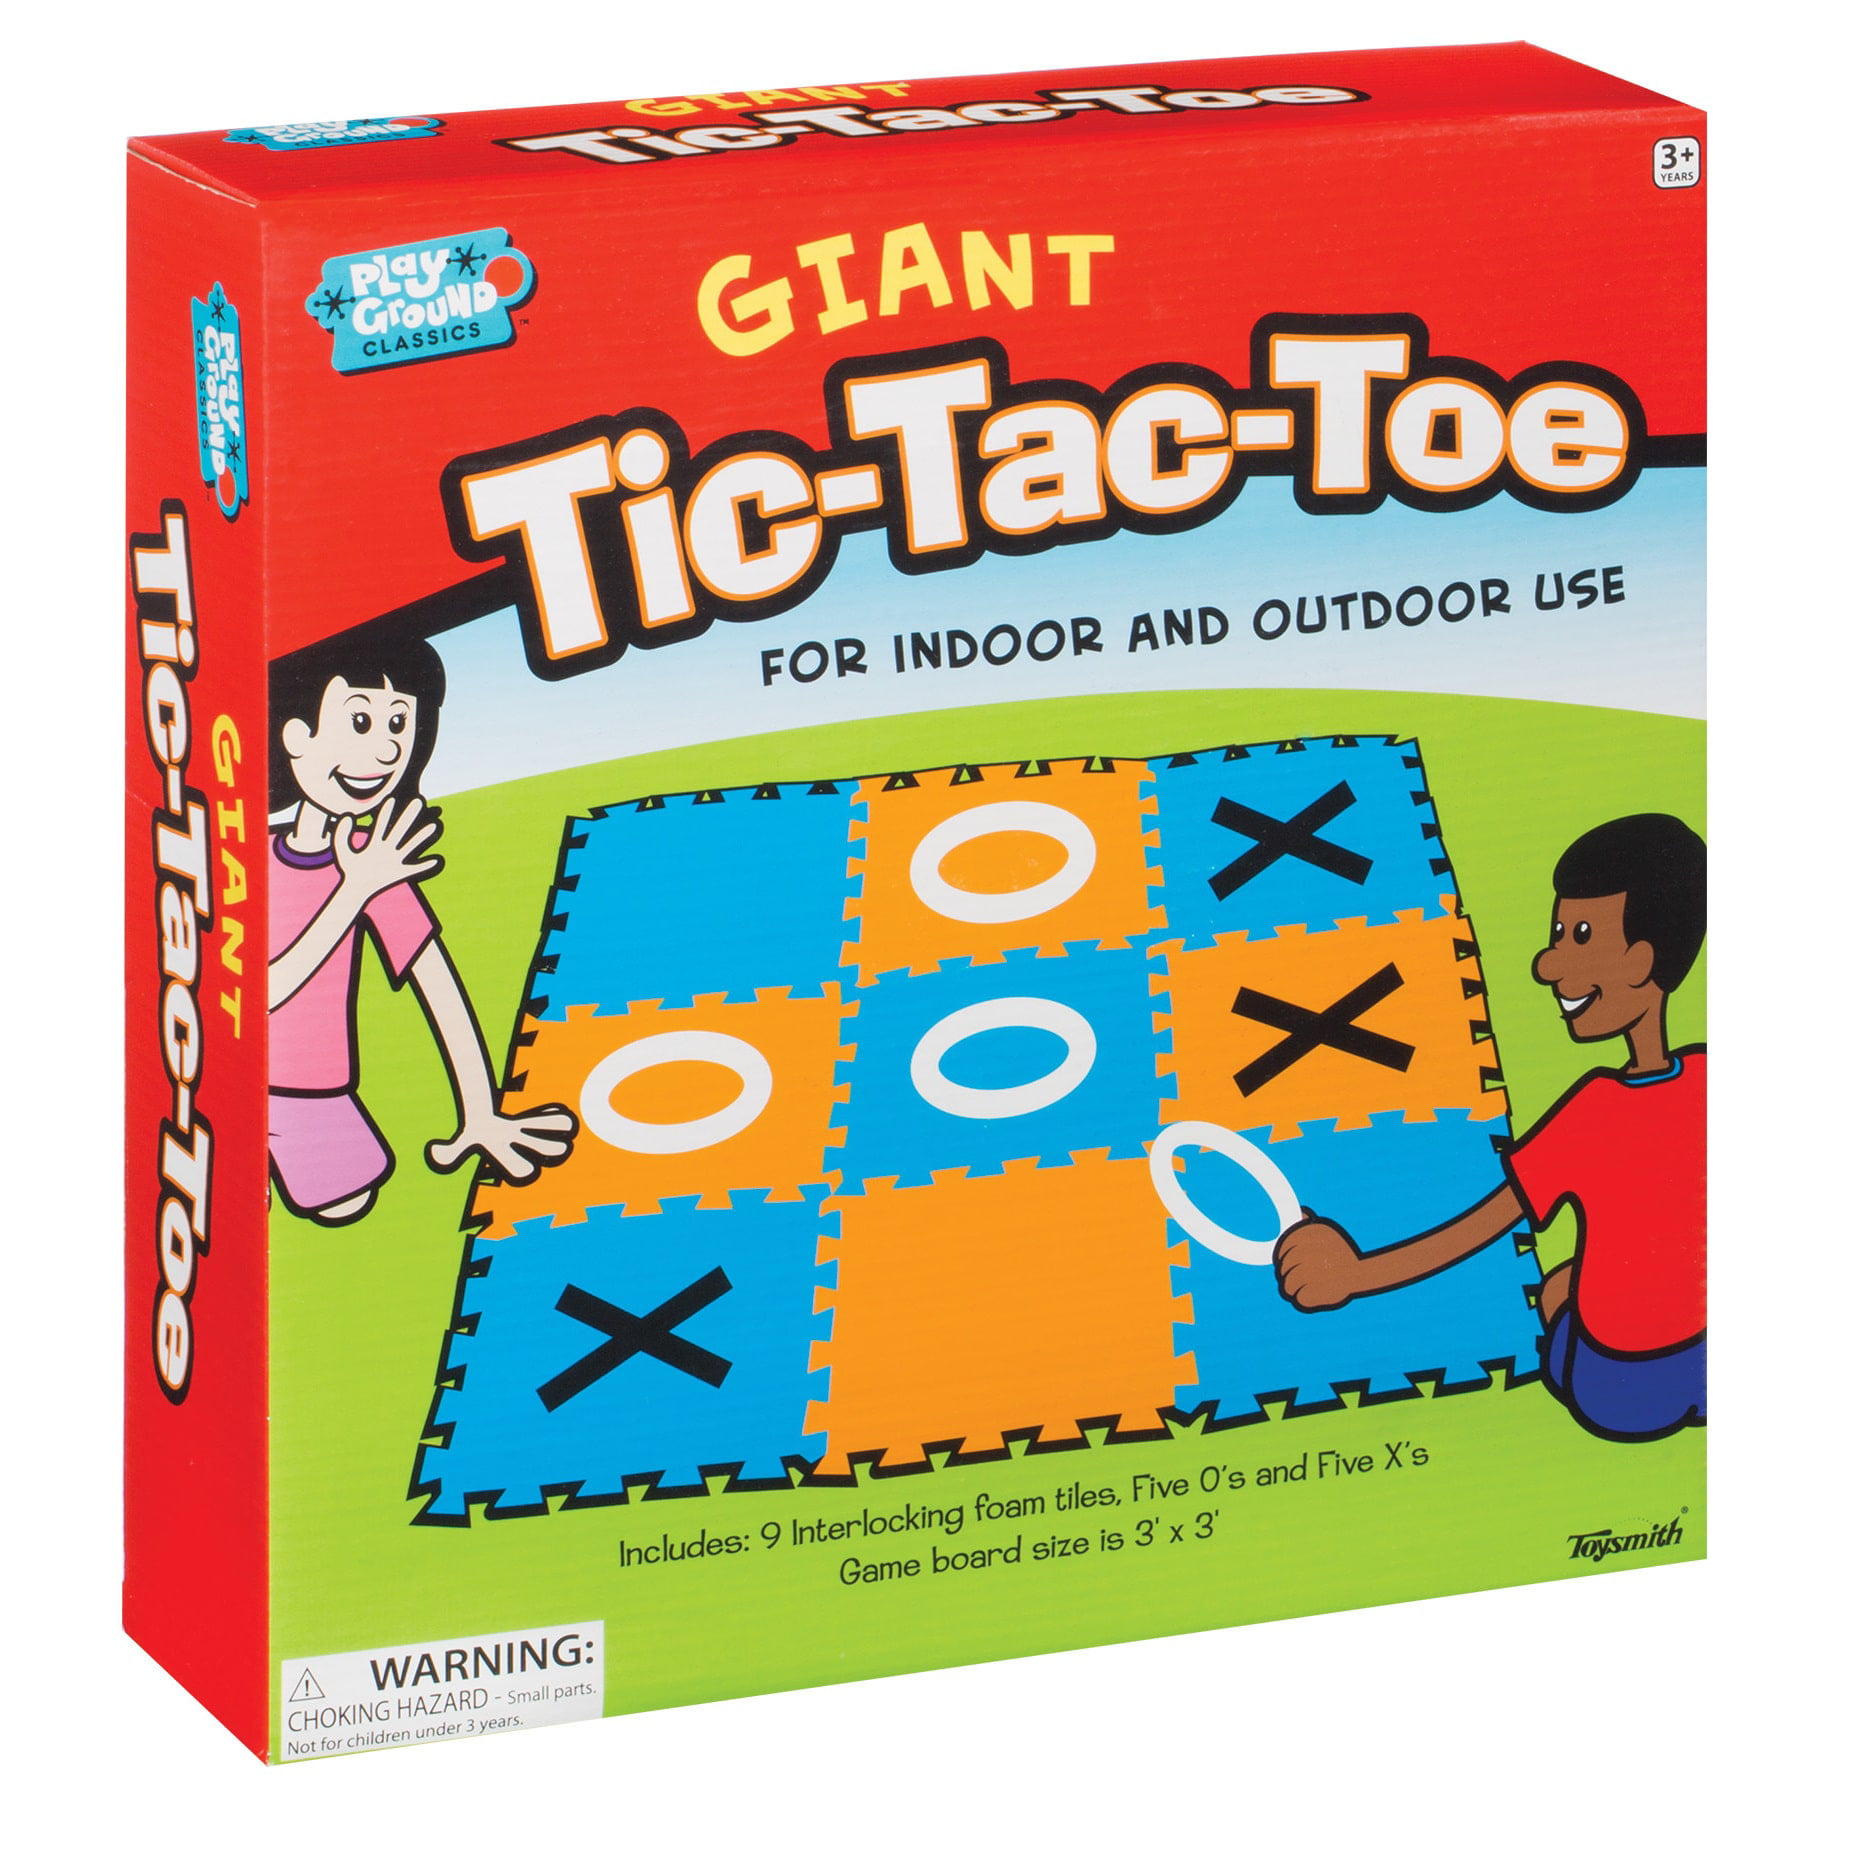 Giant Tic-Tac-Toe - Promotoss